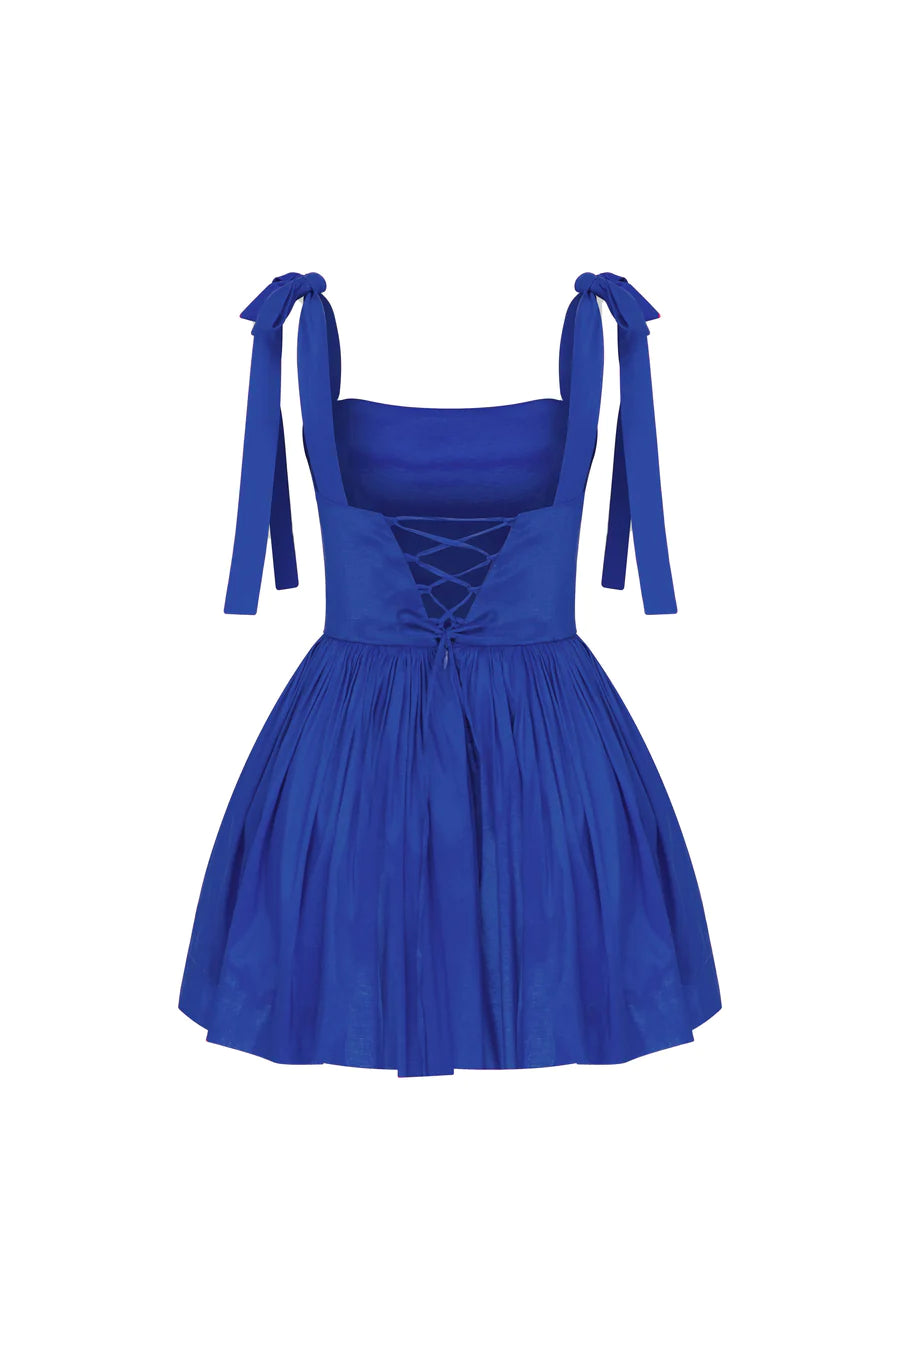 Sibby Mini Dress in Bleu